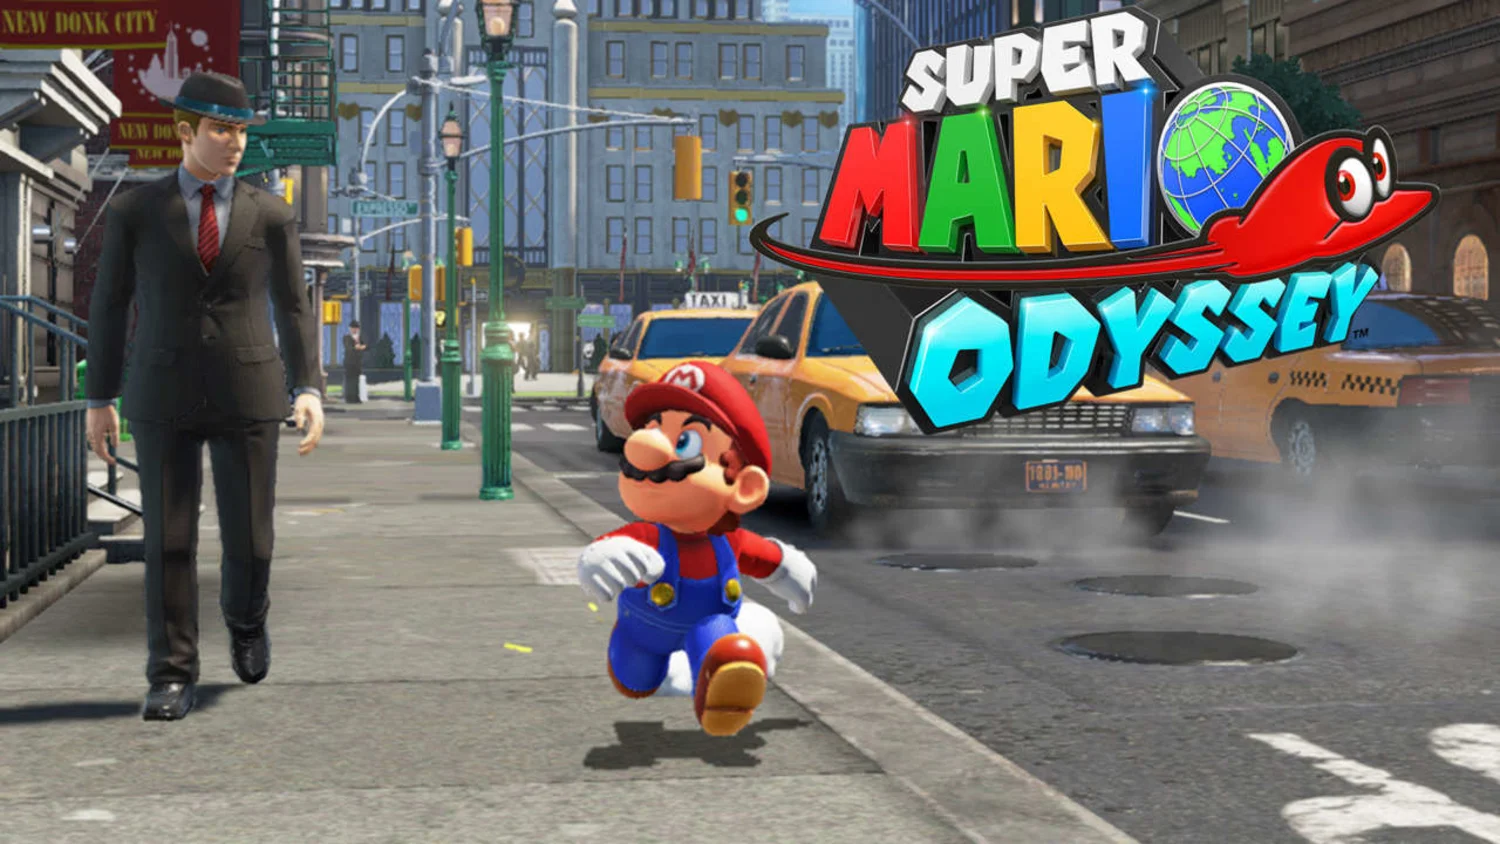 Jogo Super Mario Odyssey Nintendo Switch